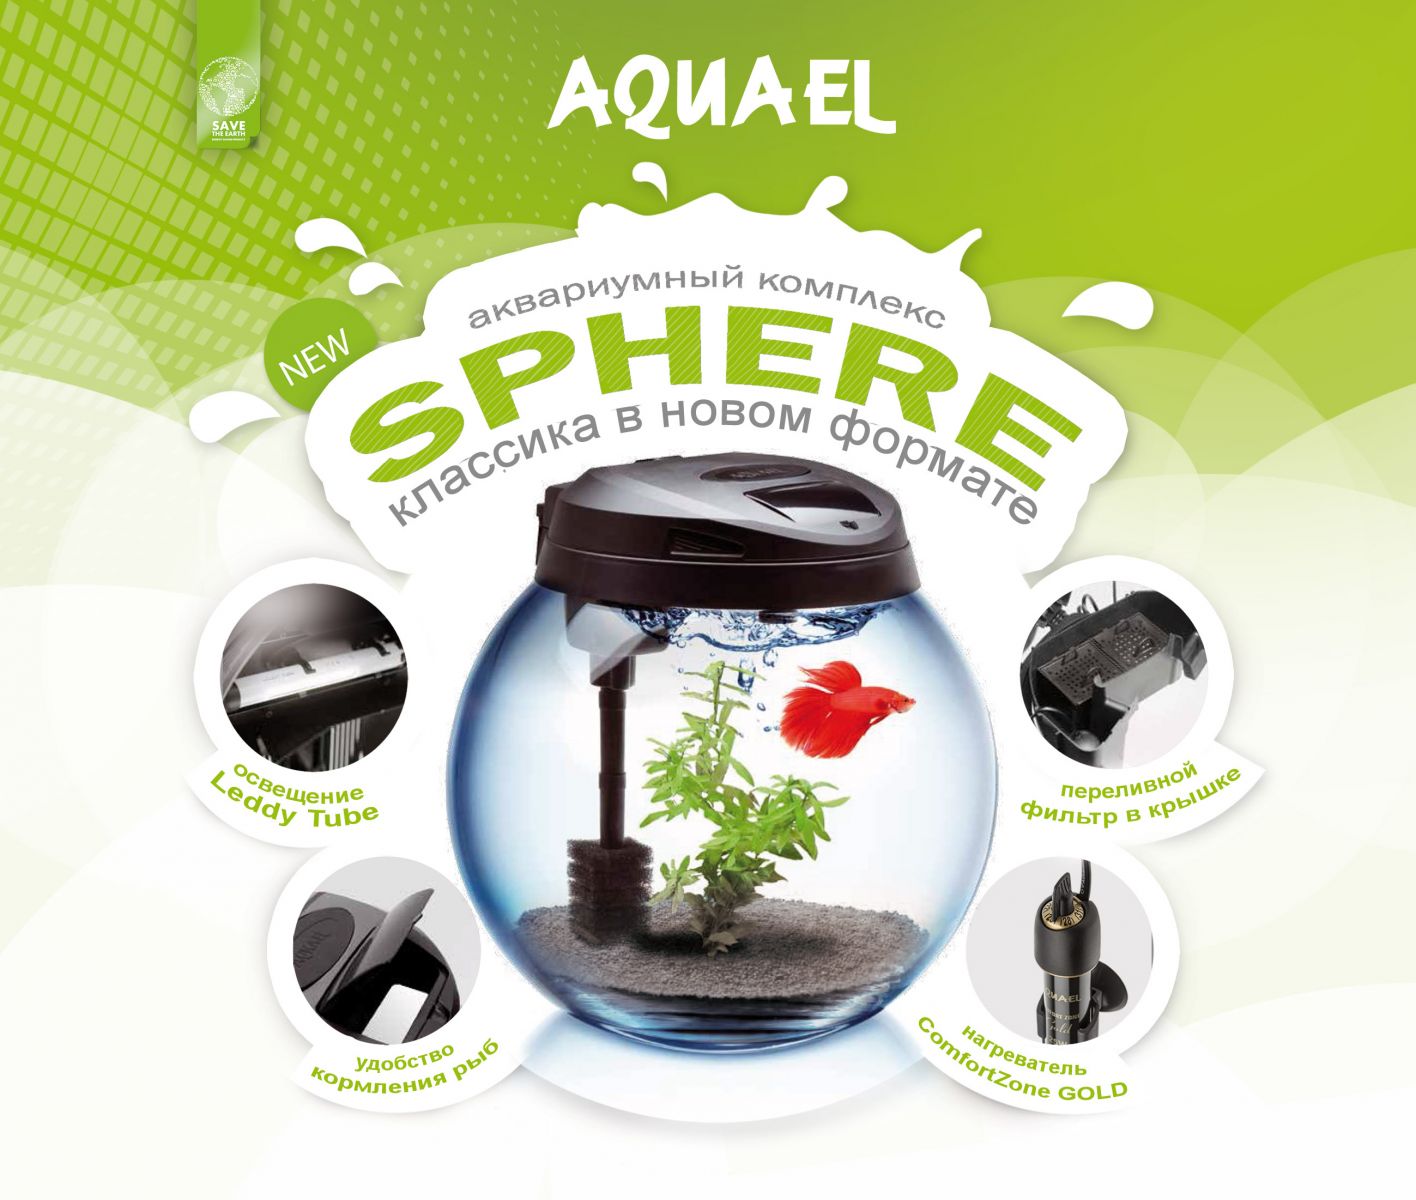 Новинка – круглый аквариум Aquael SPHERE в супермаркетах Аква Лого!